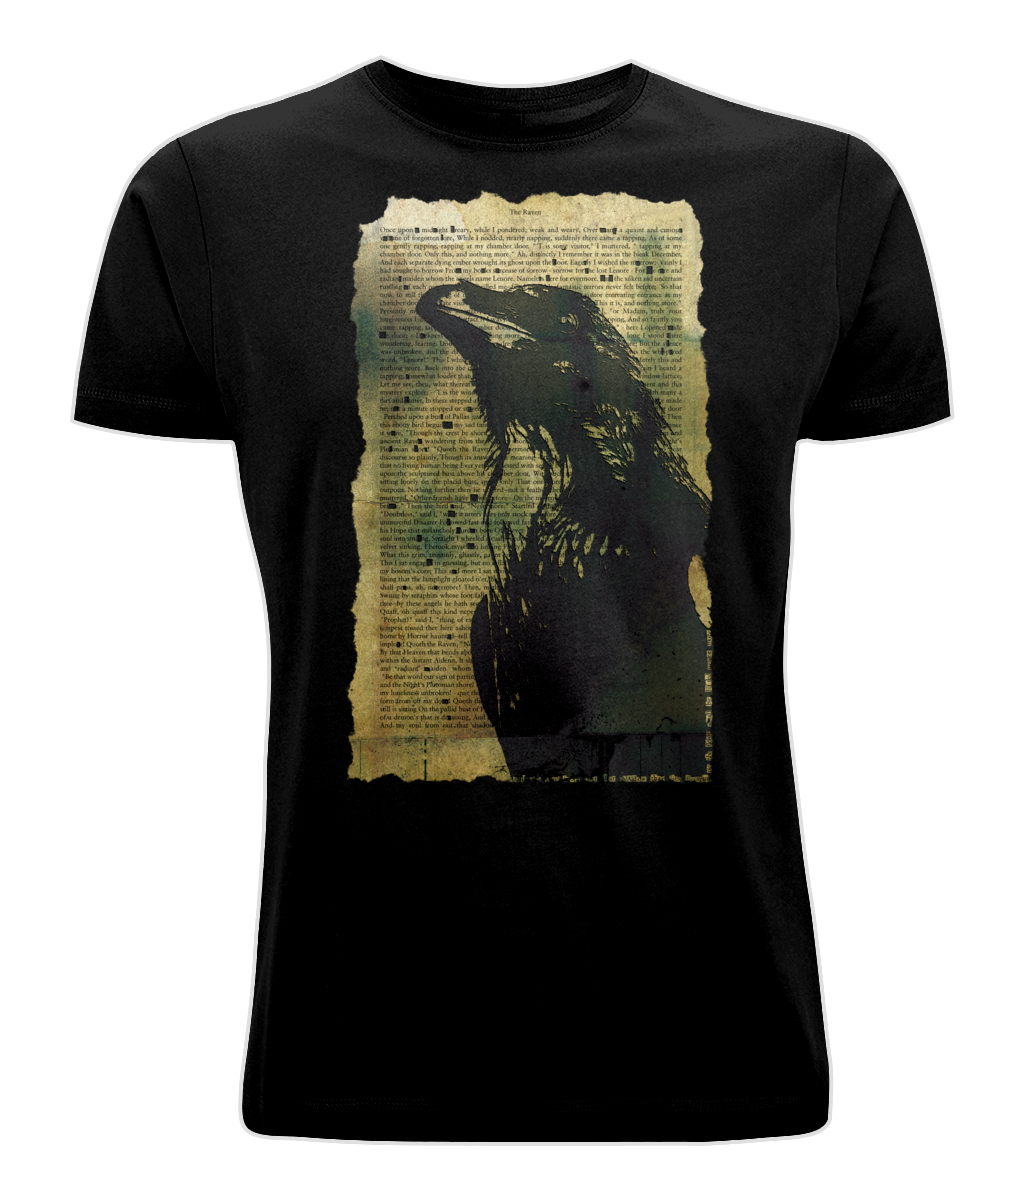 The Grunge Raven Crew Neck T-shirt